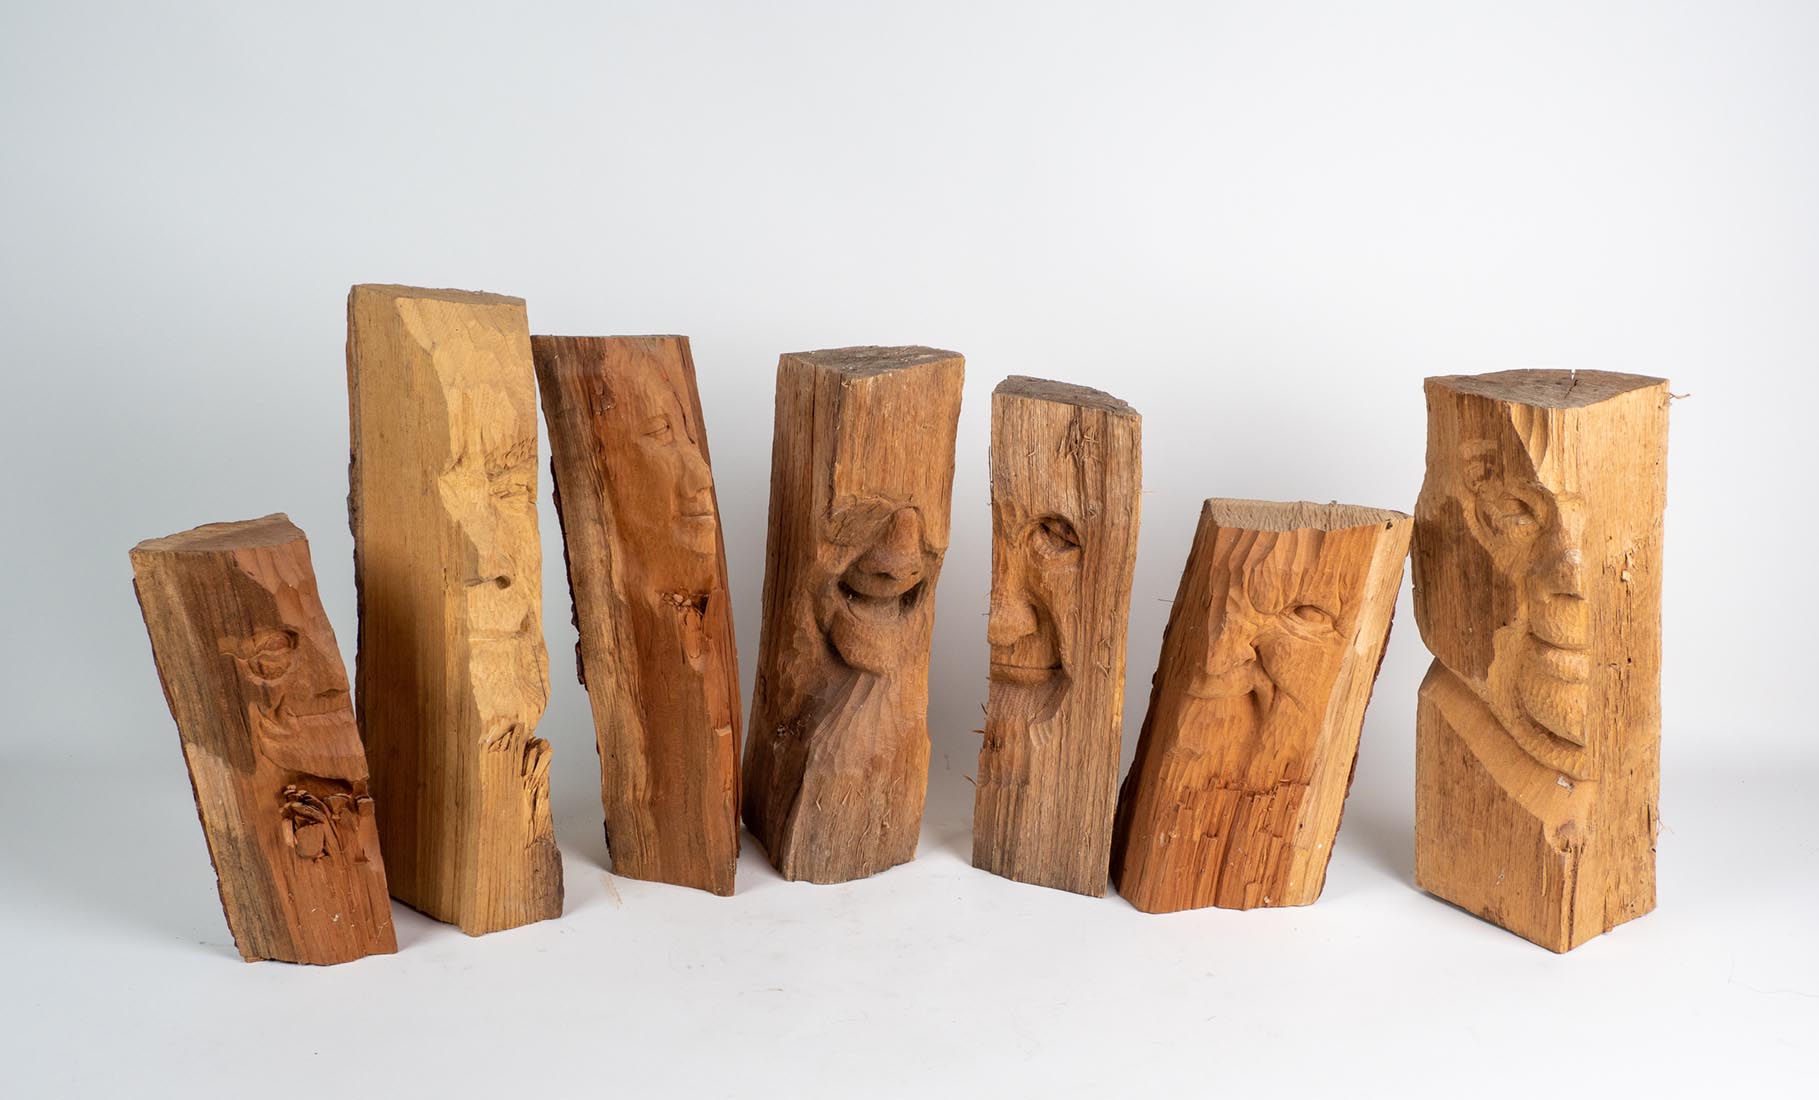 Seasoned Firewood - wood sculpture by Marjorie White Williams